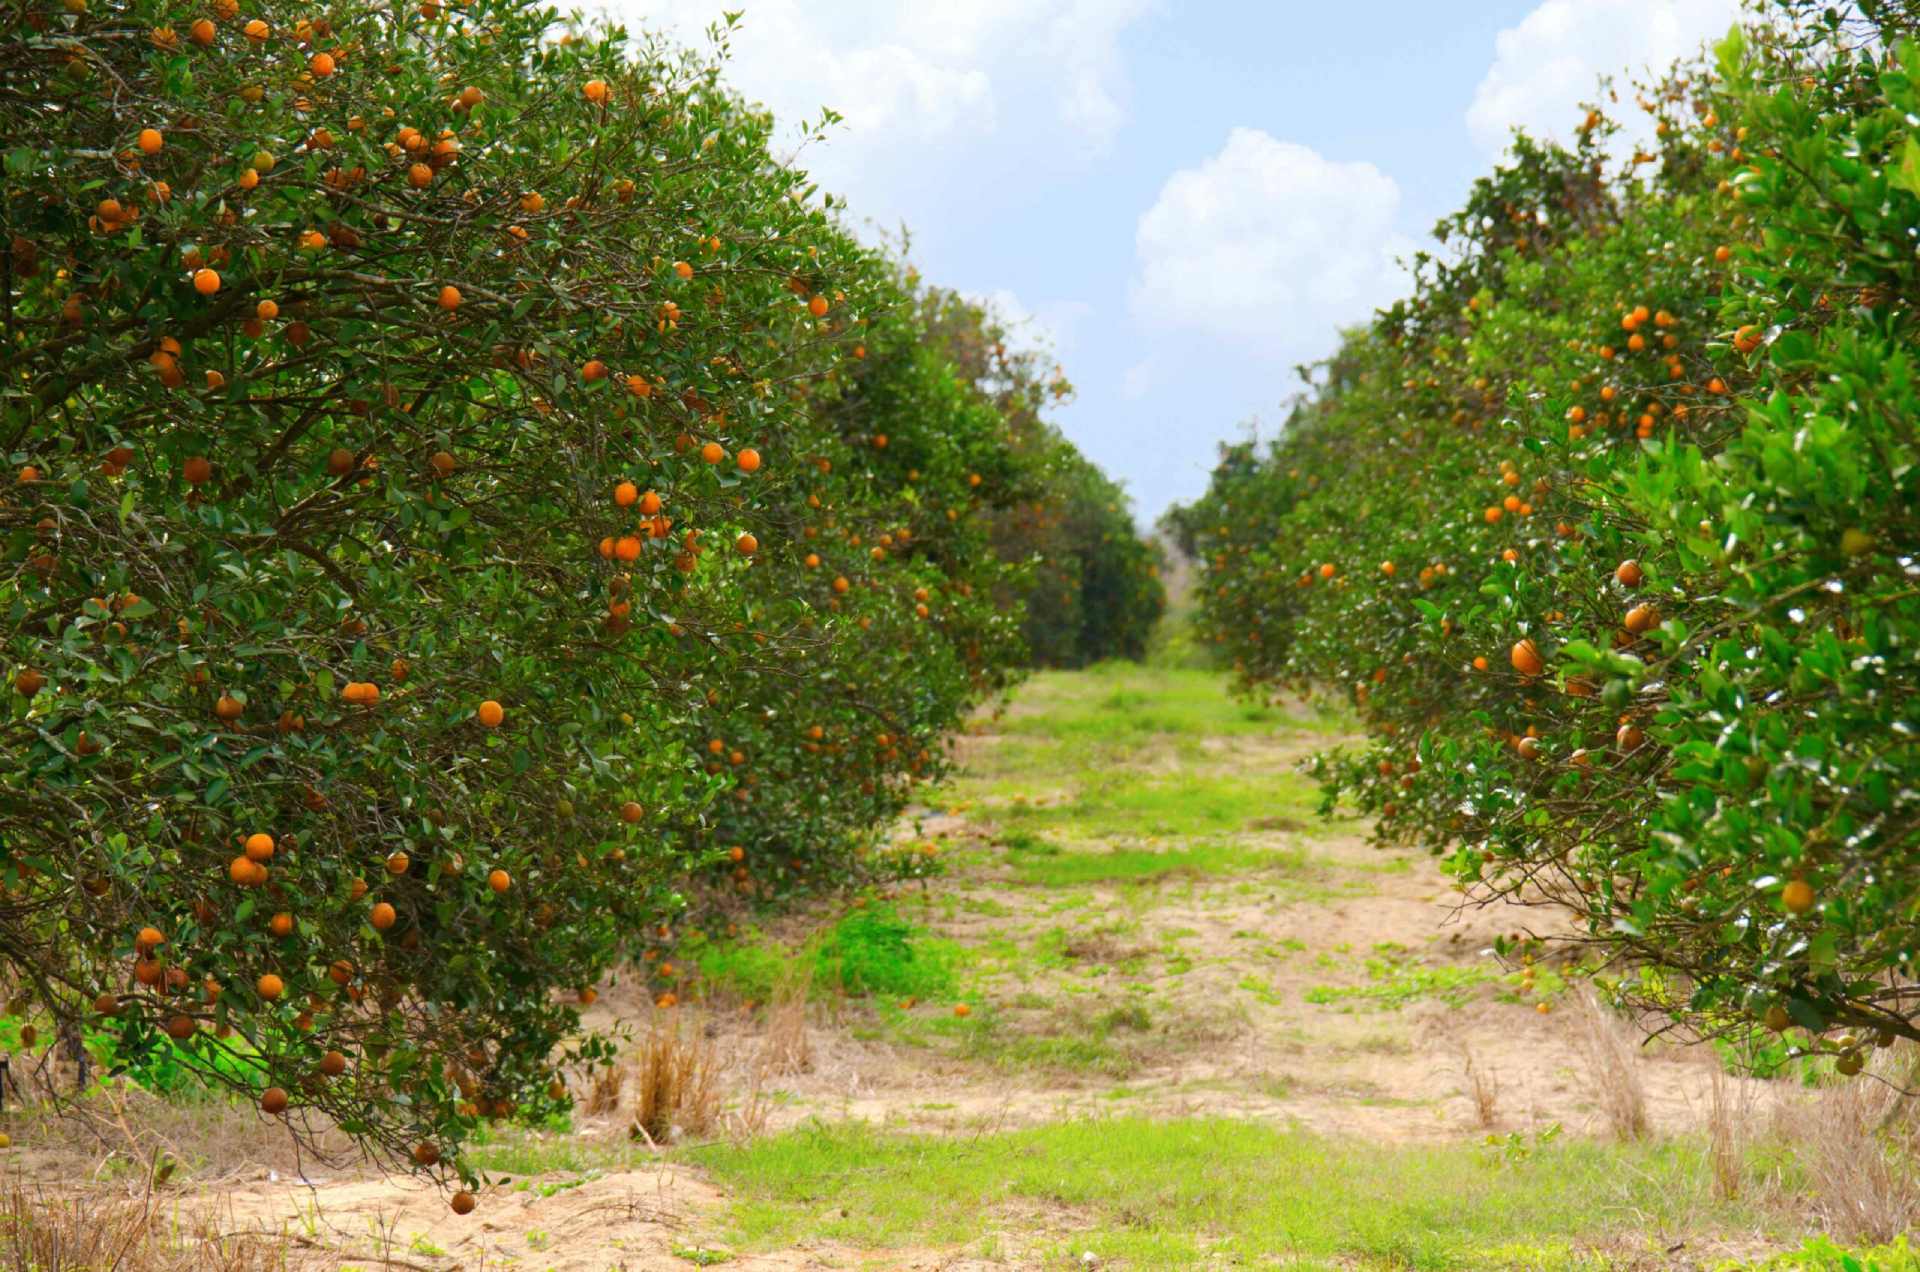 floridan orange trees